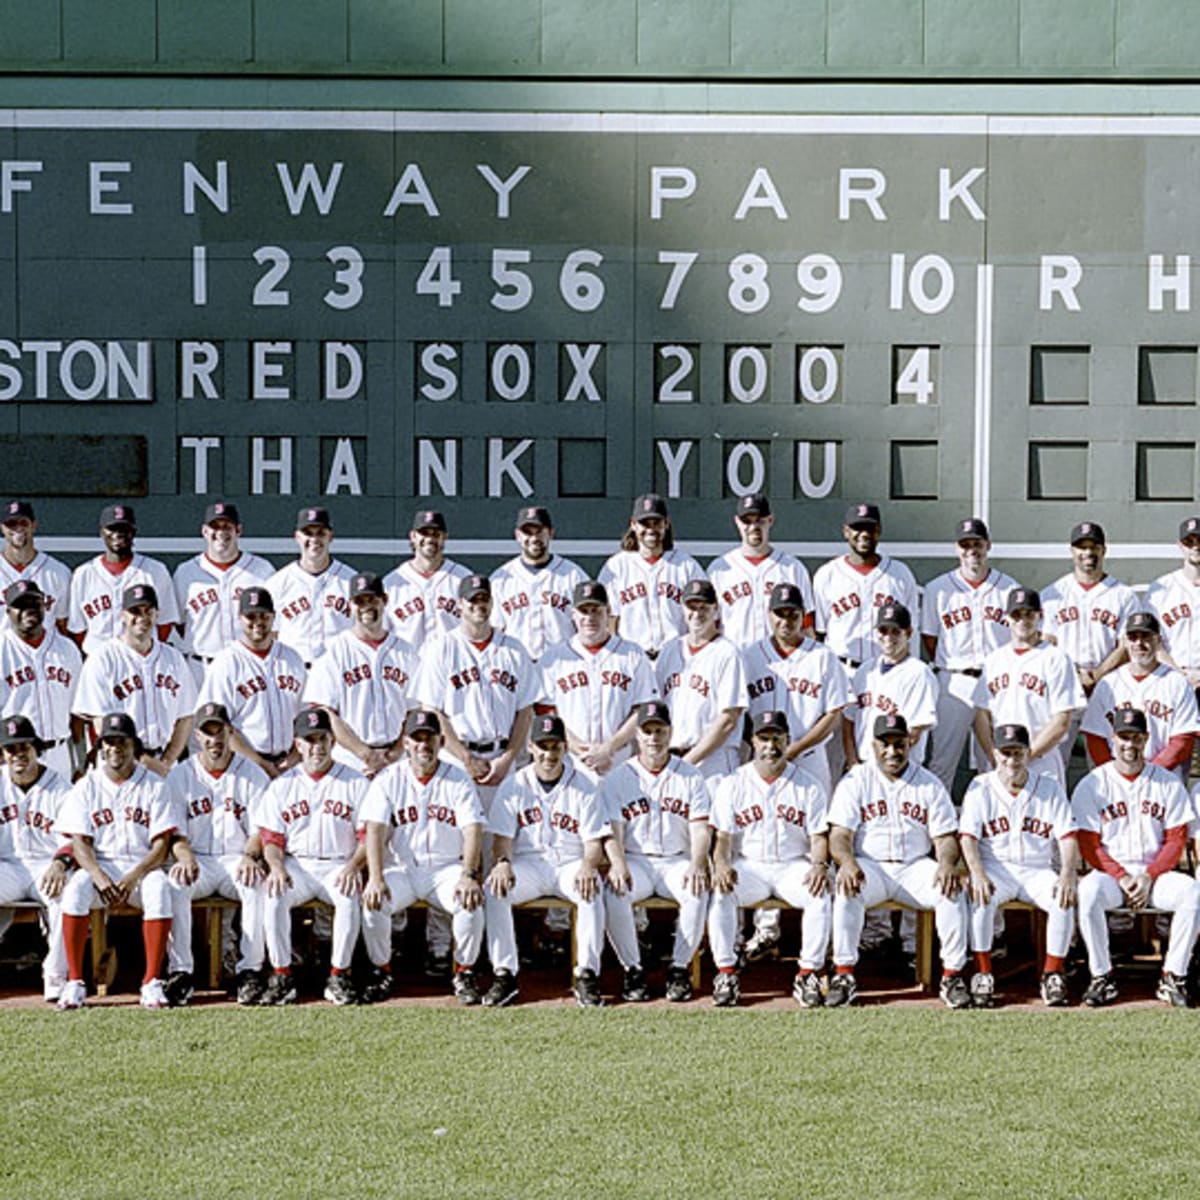 Official Johnny Pesky Boston Red Sox Jerseys, Red Sox Johnny Pesky Baseball  Jerseys, Uniforms